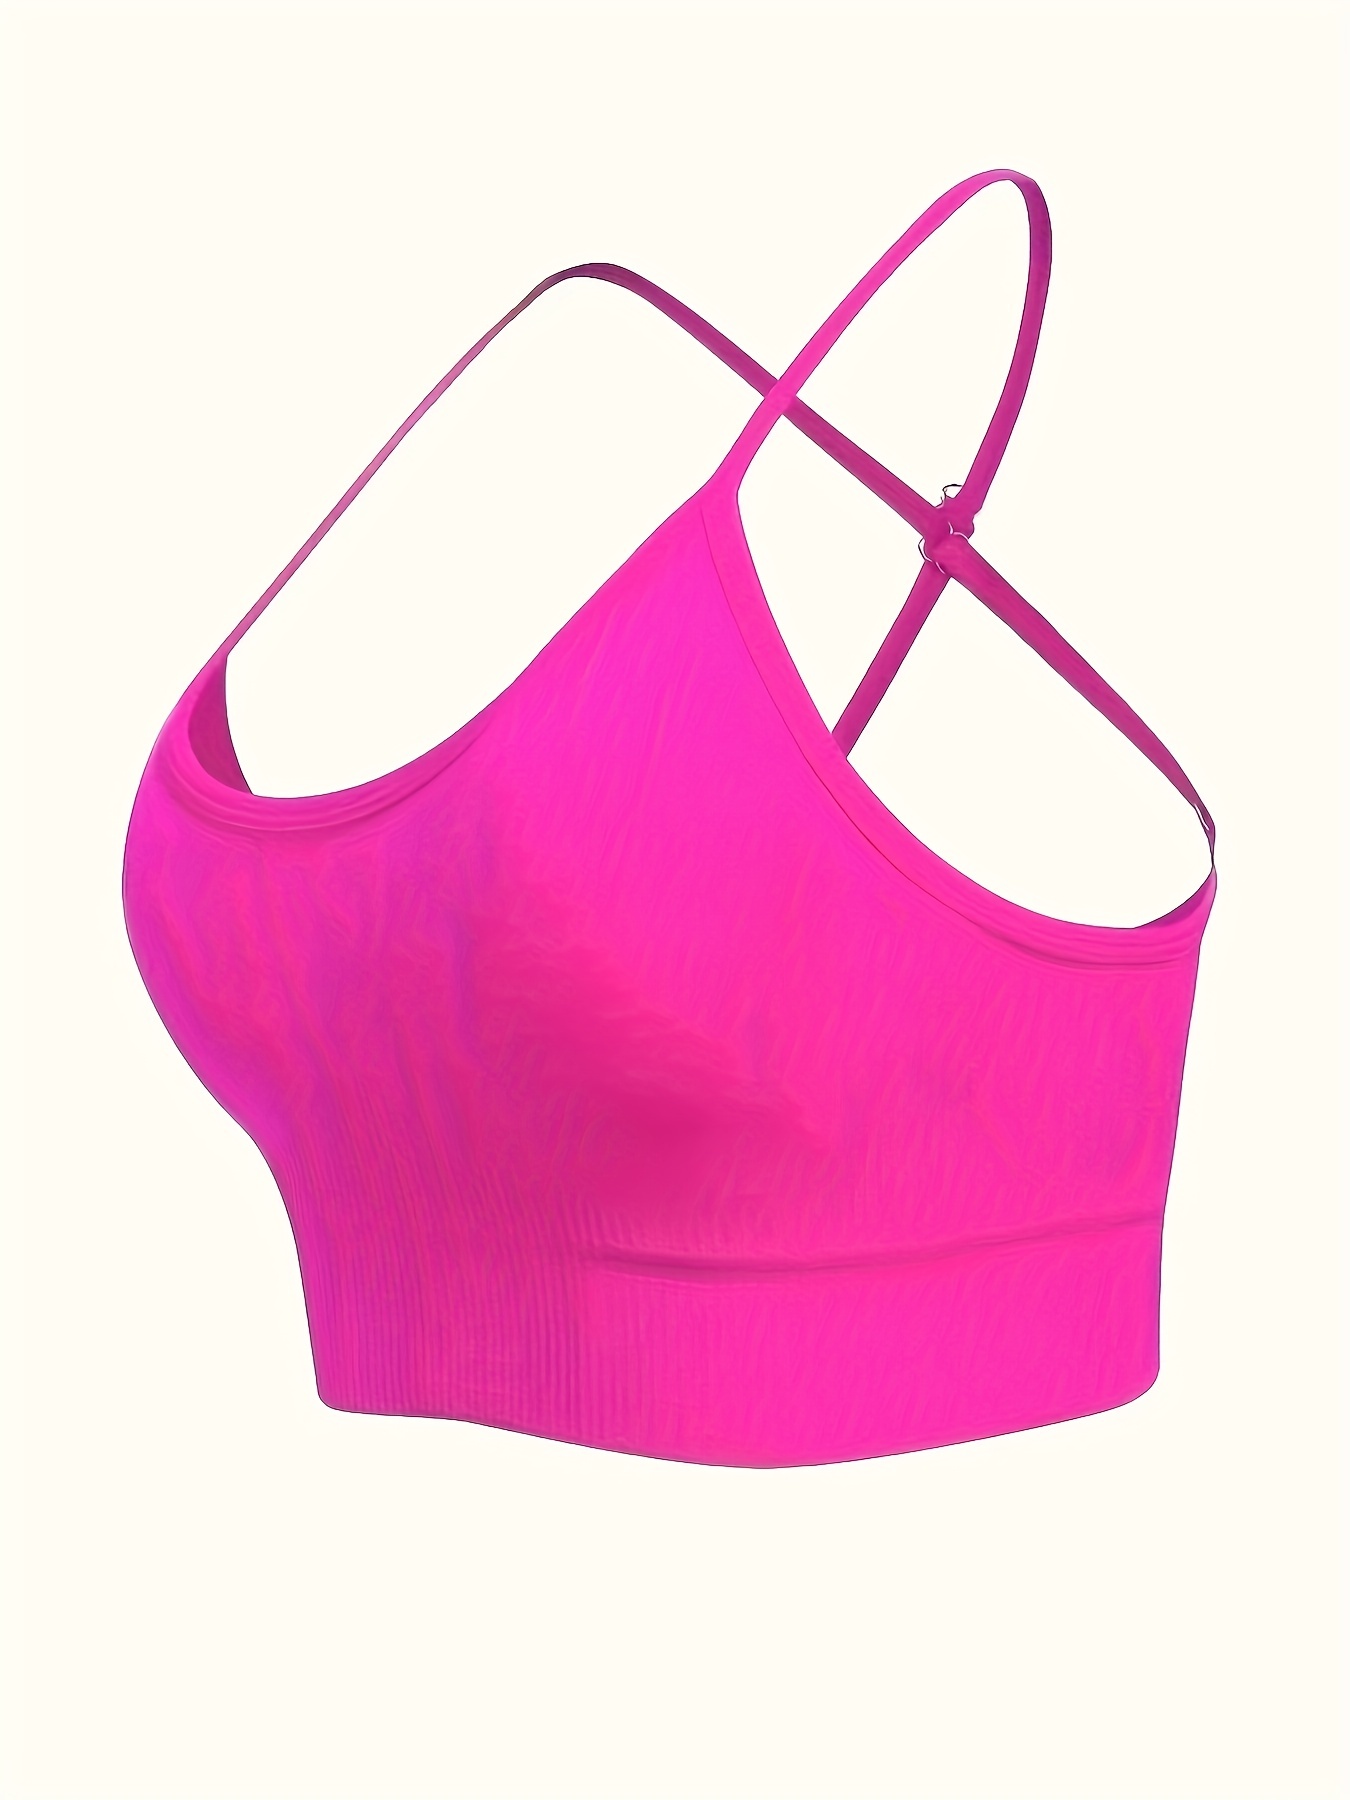 Scyoekwg Strappy Sports Bras for Women Criss Cross Back Quick Dry  Shockproof Running Fitness Bra Workout Yoga Sports Bras Pink XXL